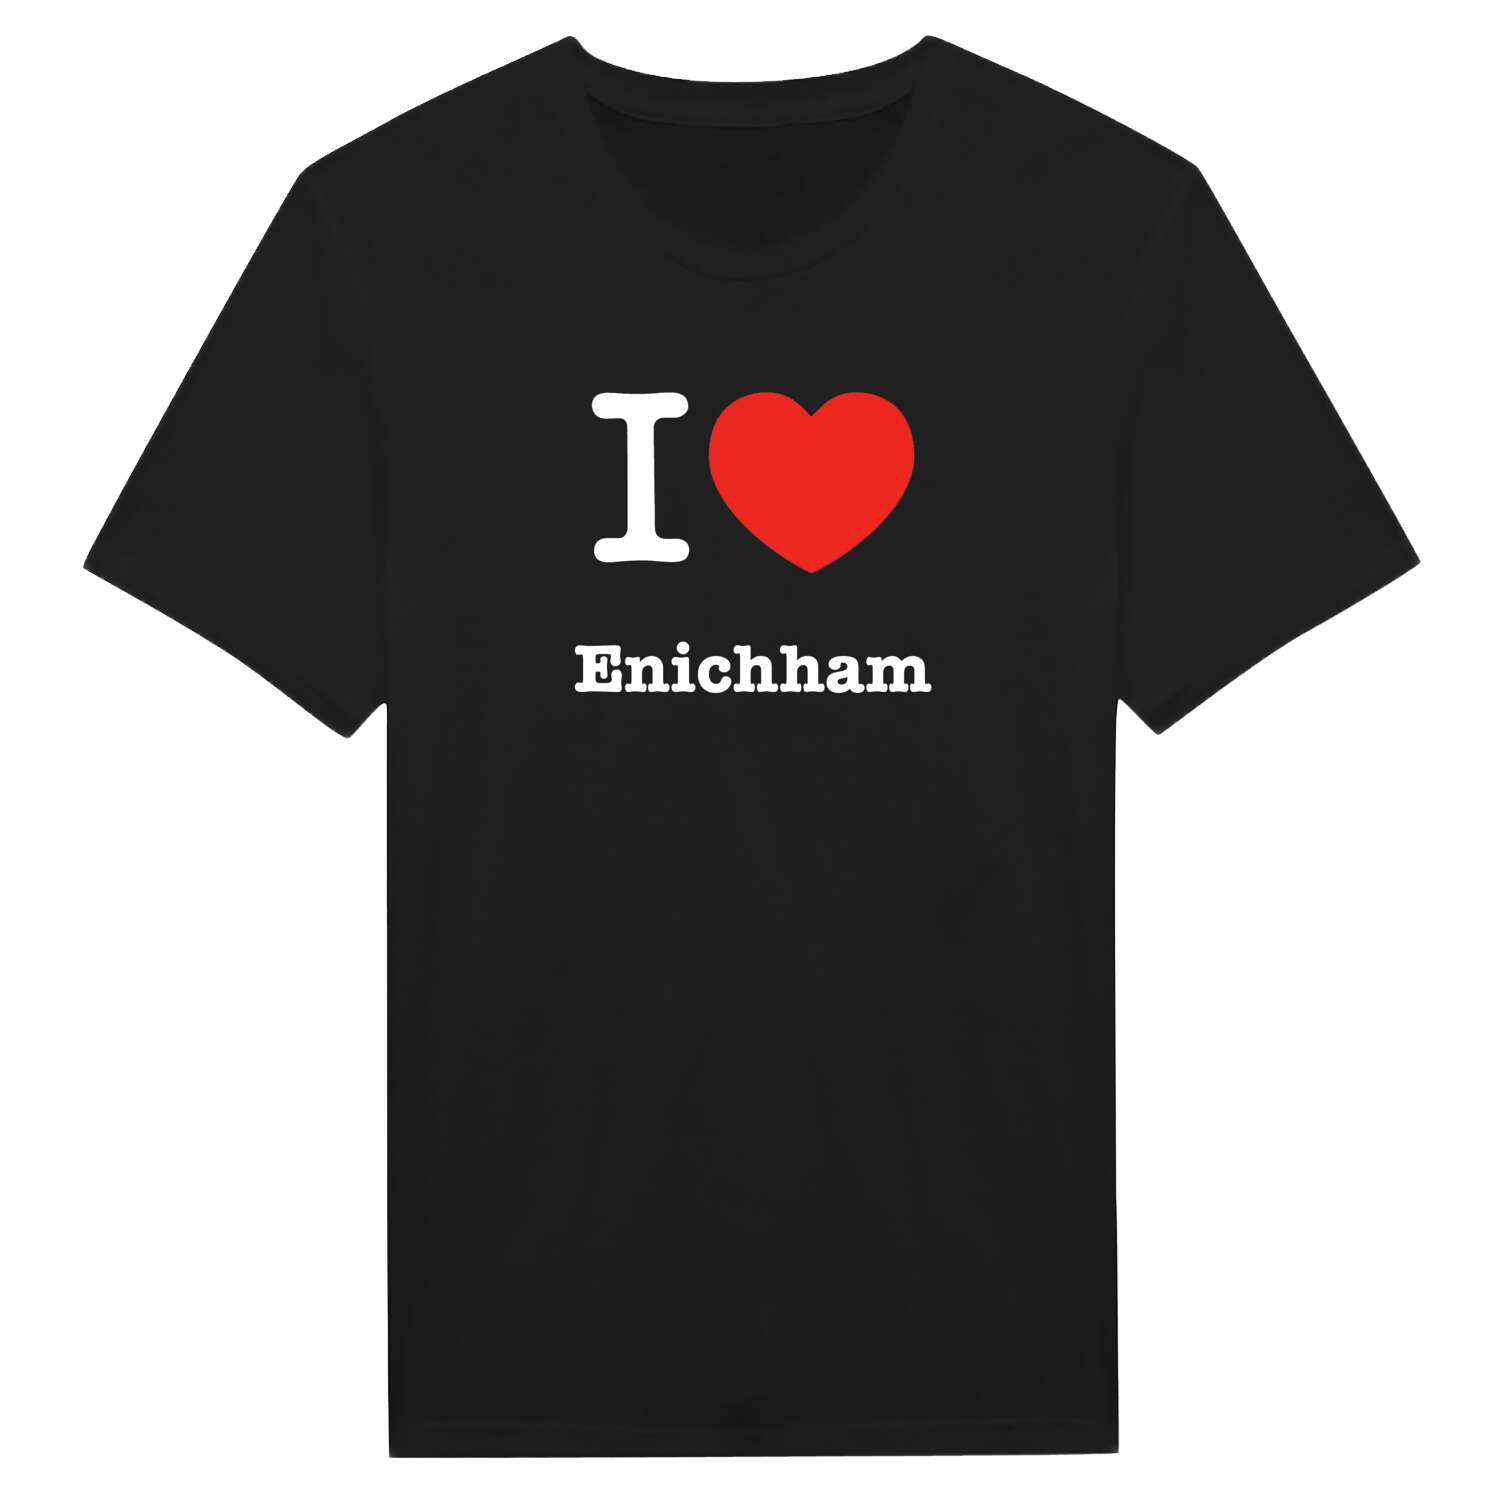 Enichham T-Shirt »I love«